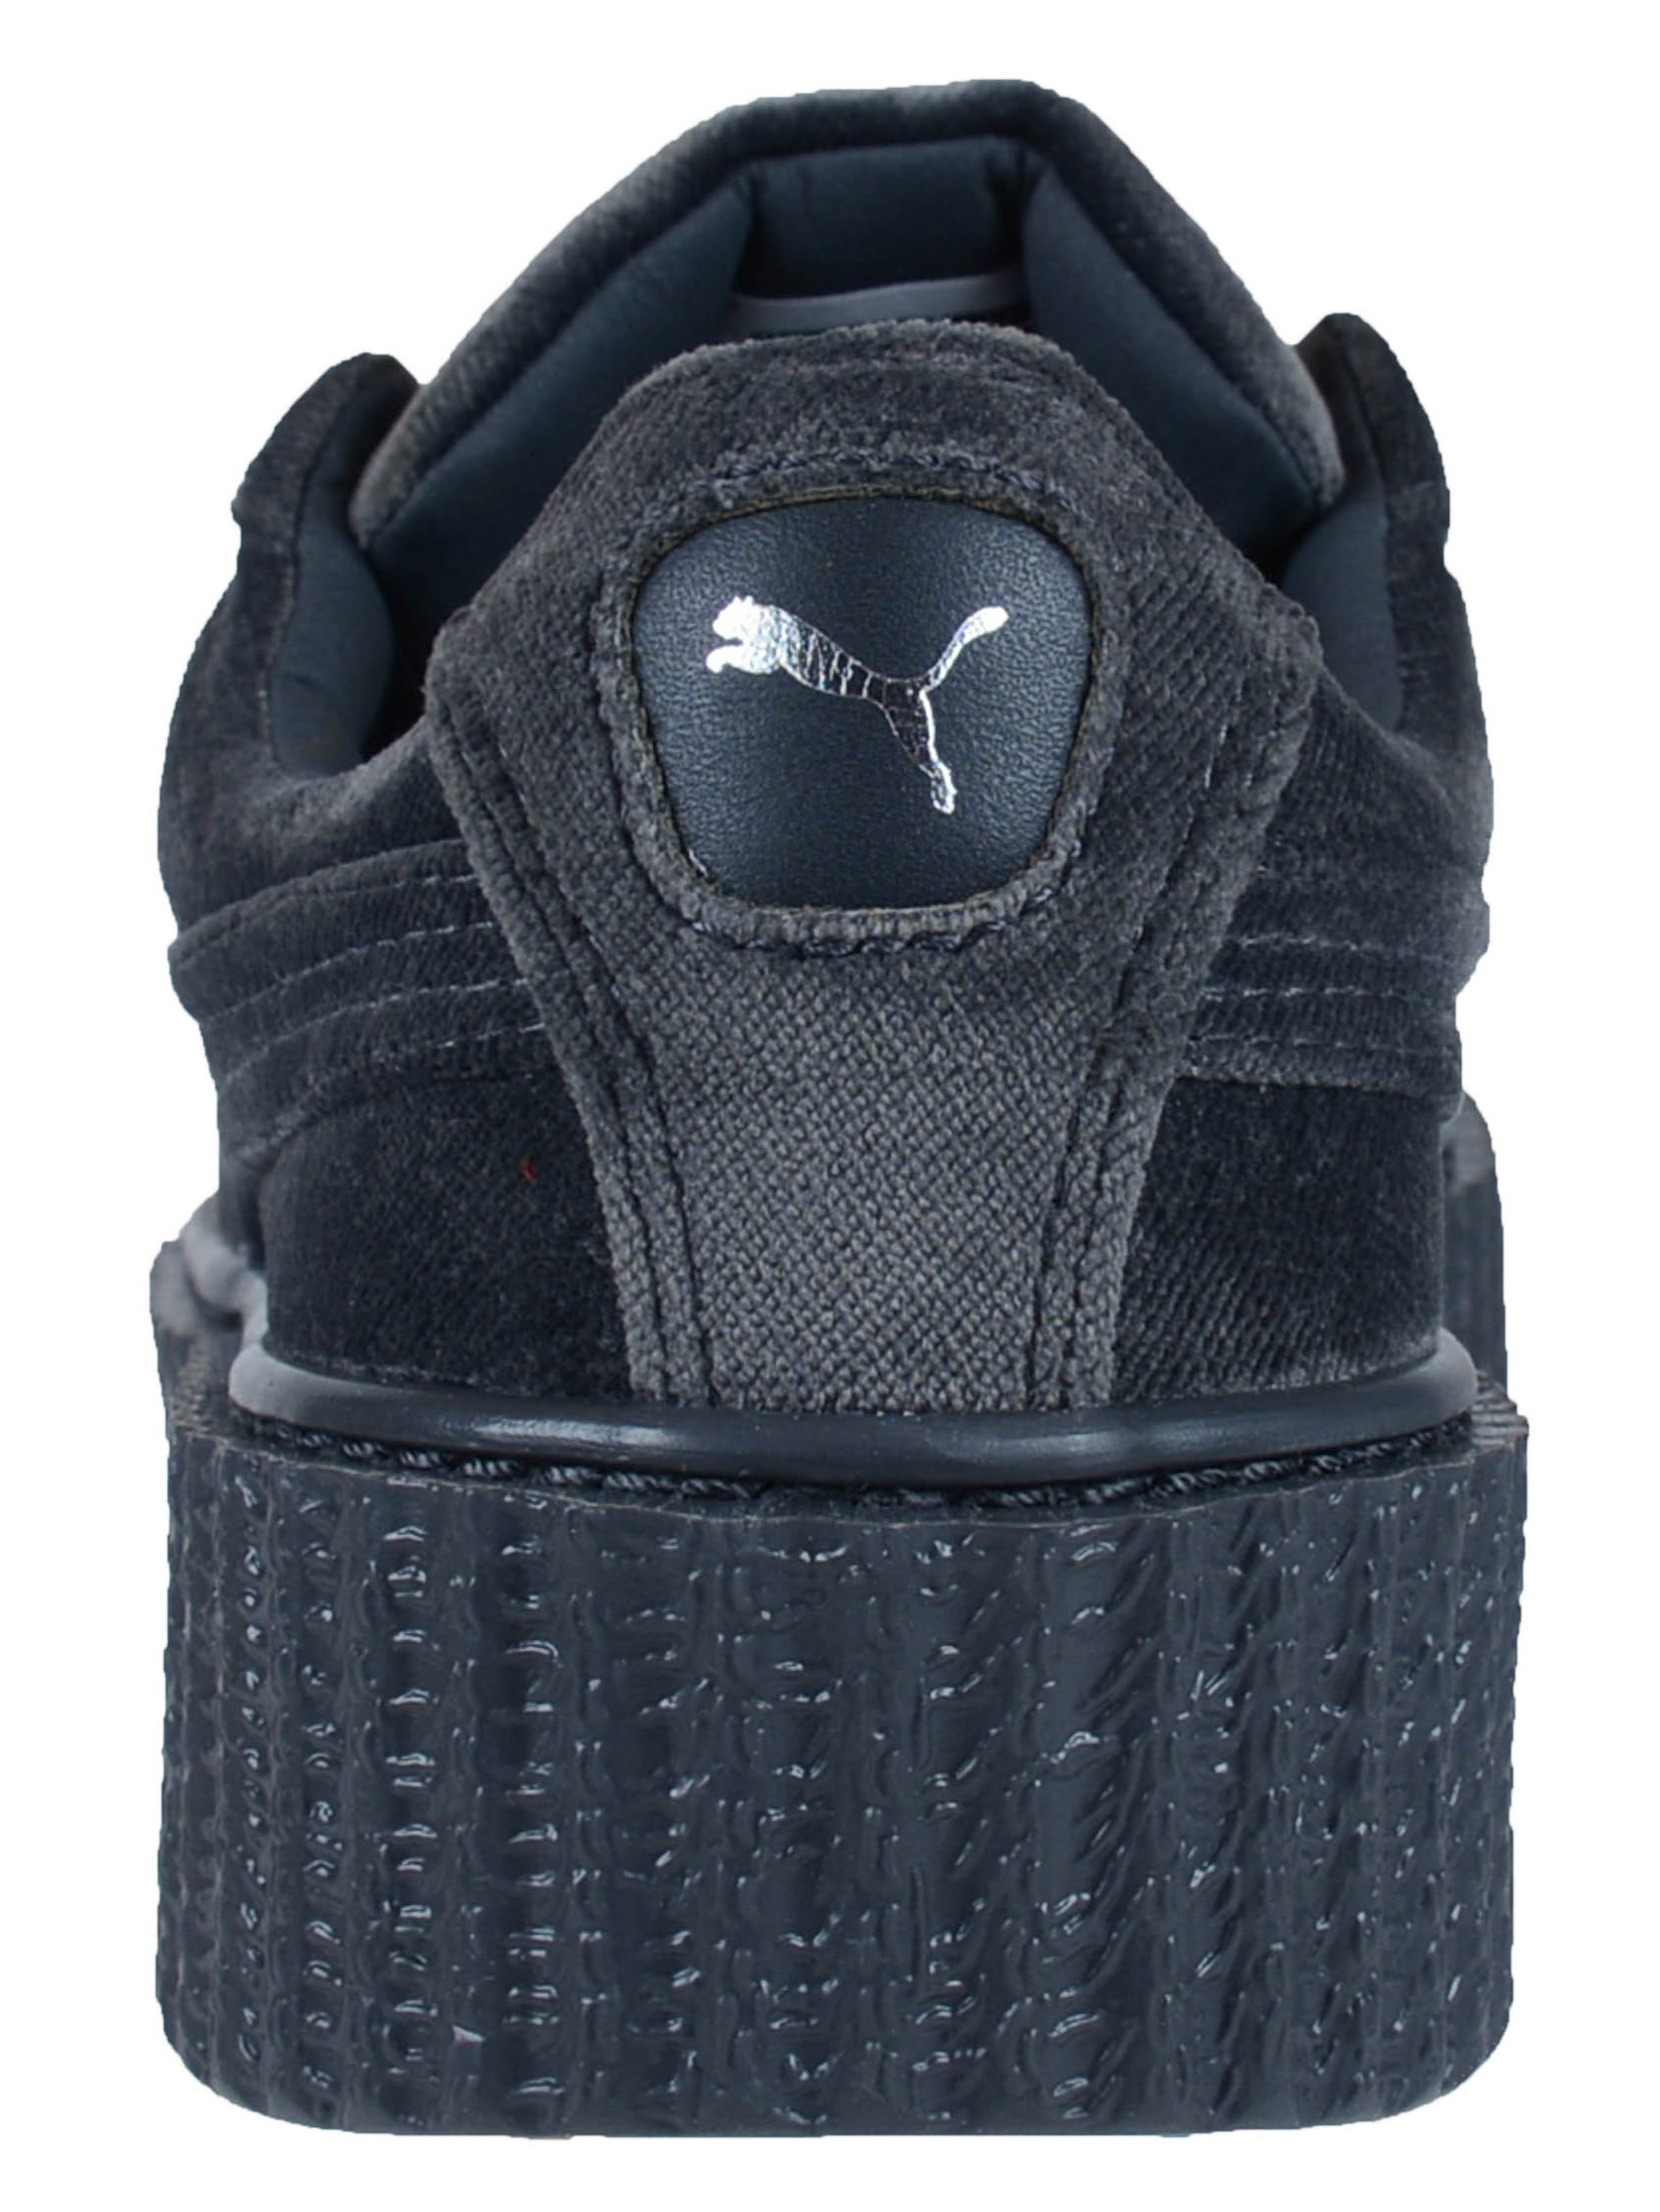 Puma Creeper Velvet Glacier Grey / Ankle-High Fashion Sneaker - 8.5M - Walmart.com